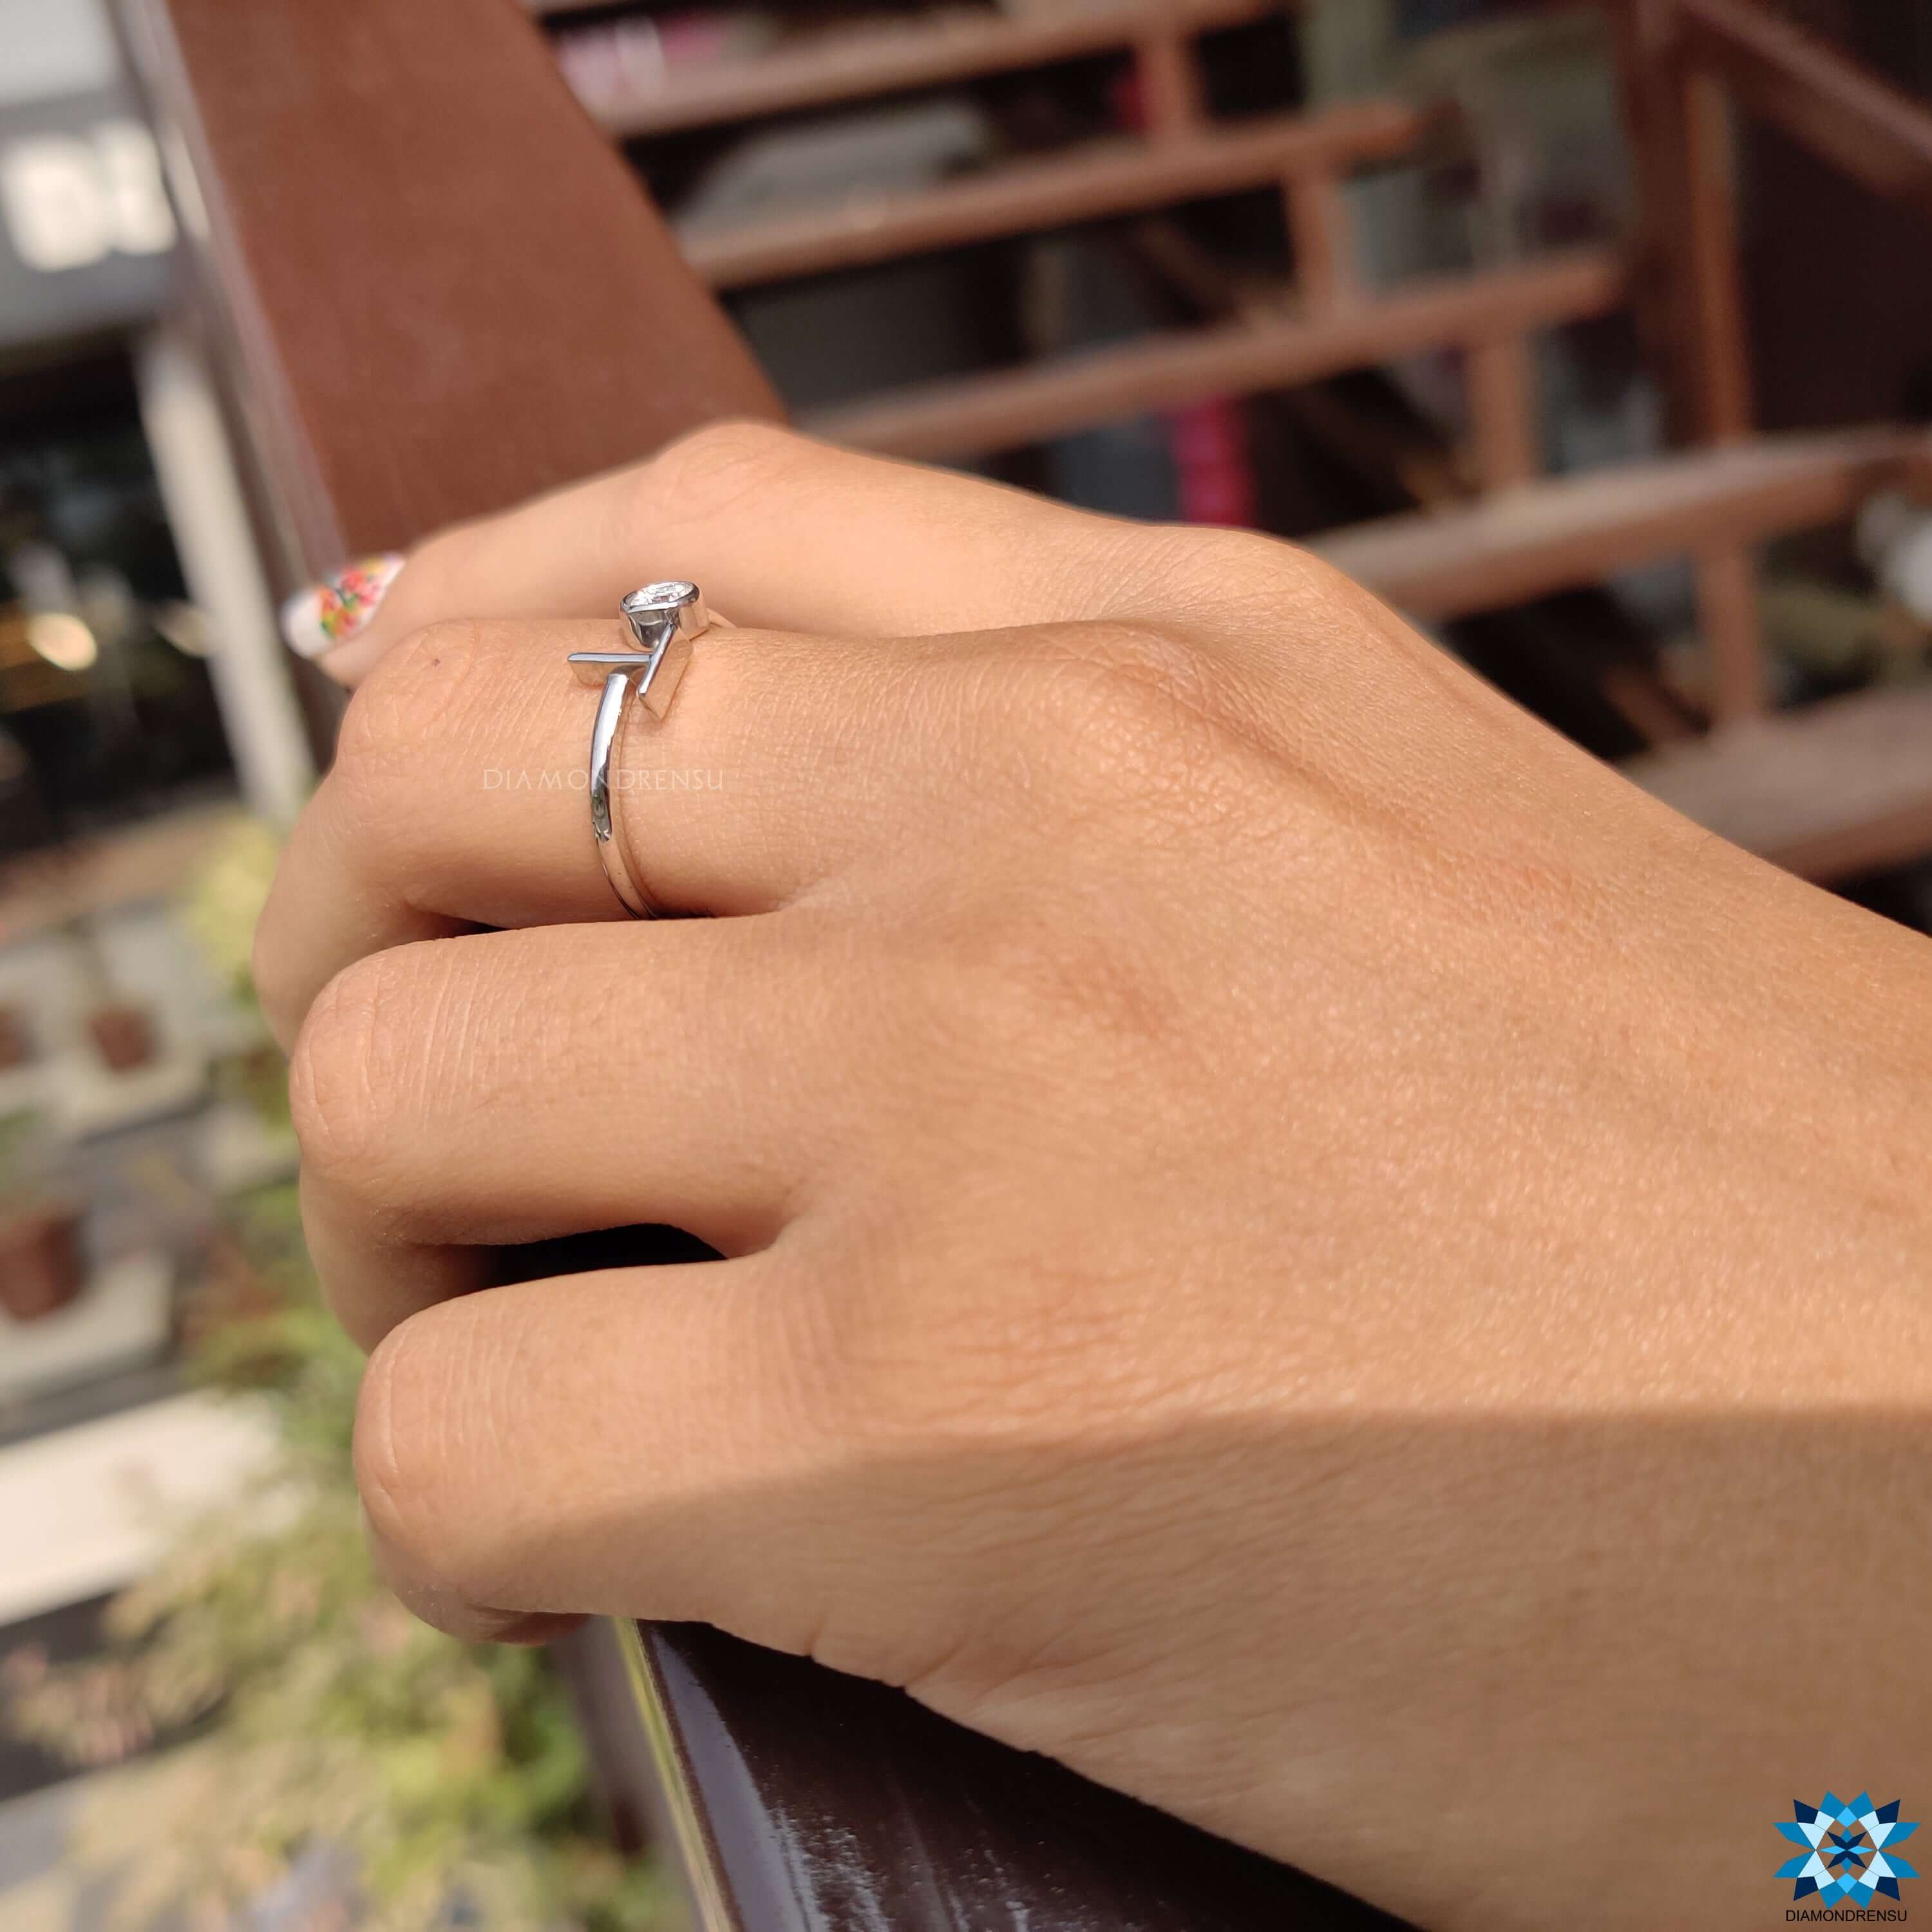 personalized engagement ring - diamondrensu